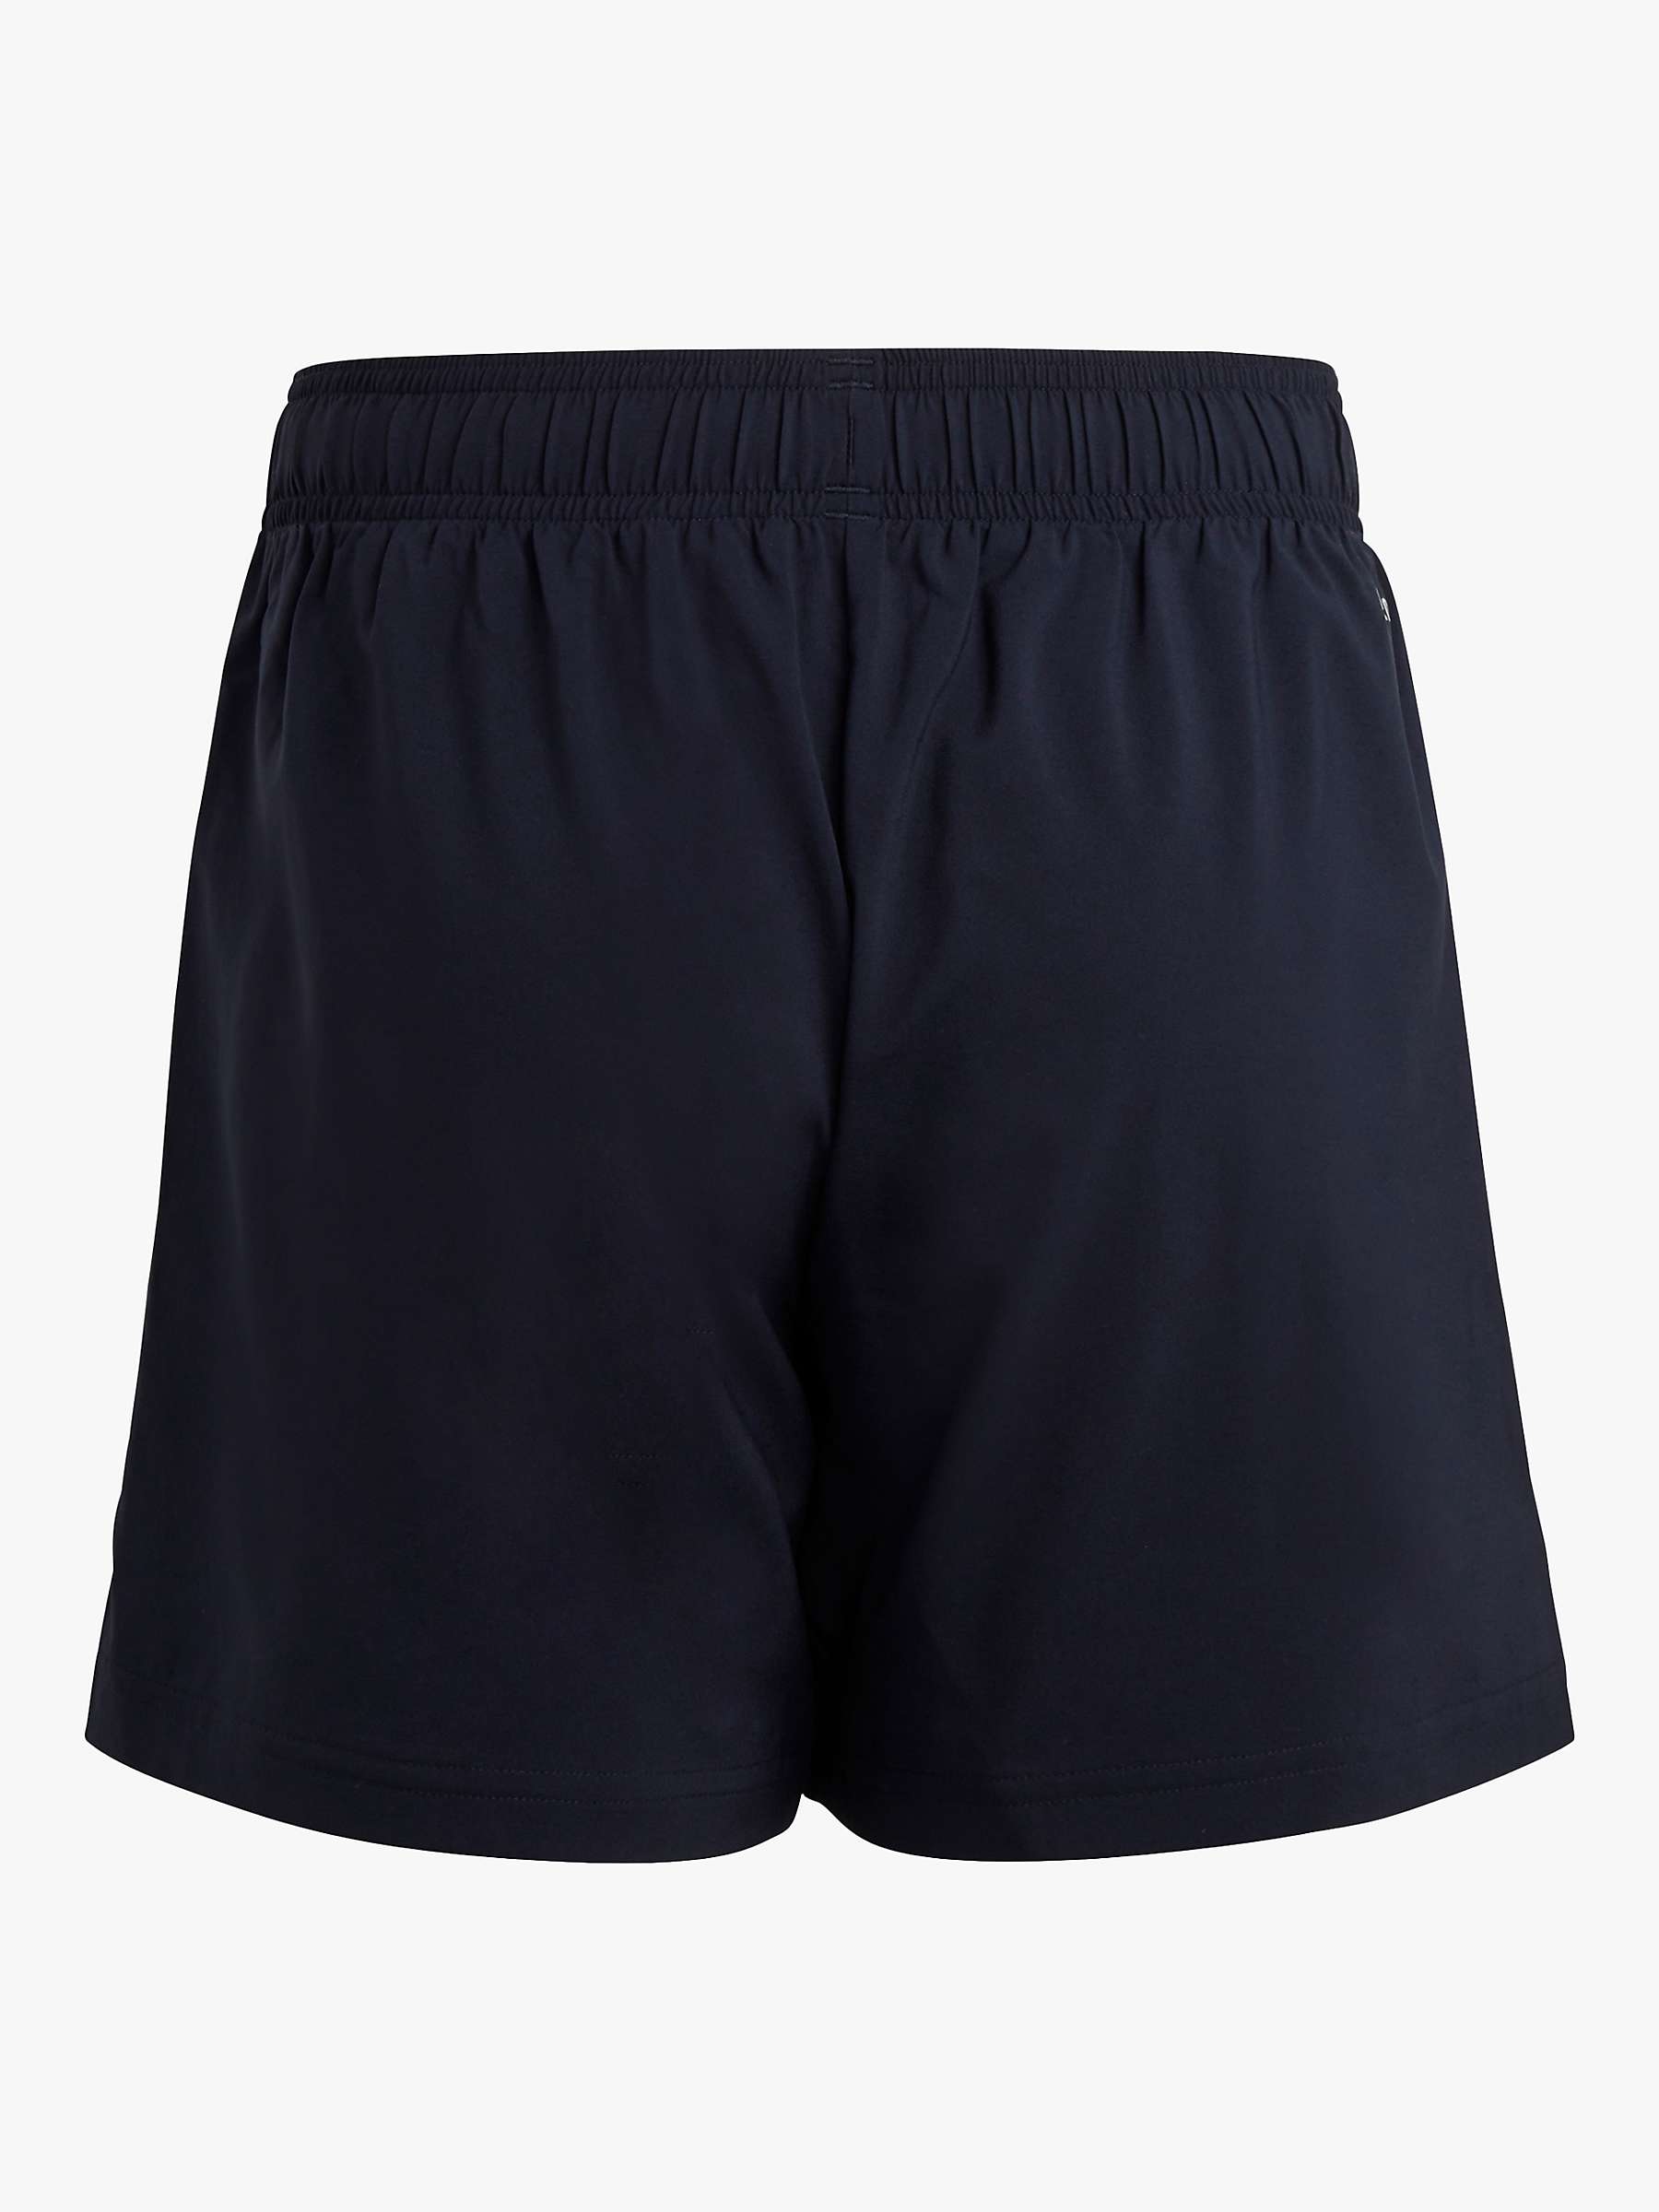 Buy adidas Kids' Chelsea Shorts, Navy Online at johnlewis.com